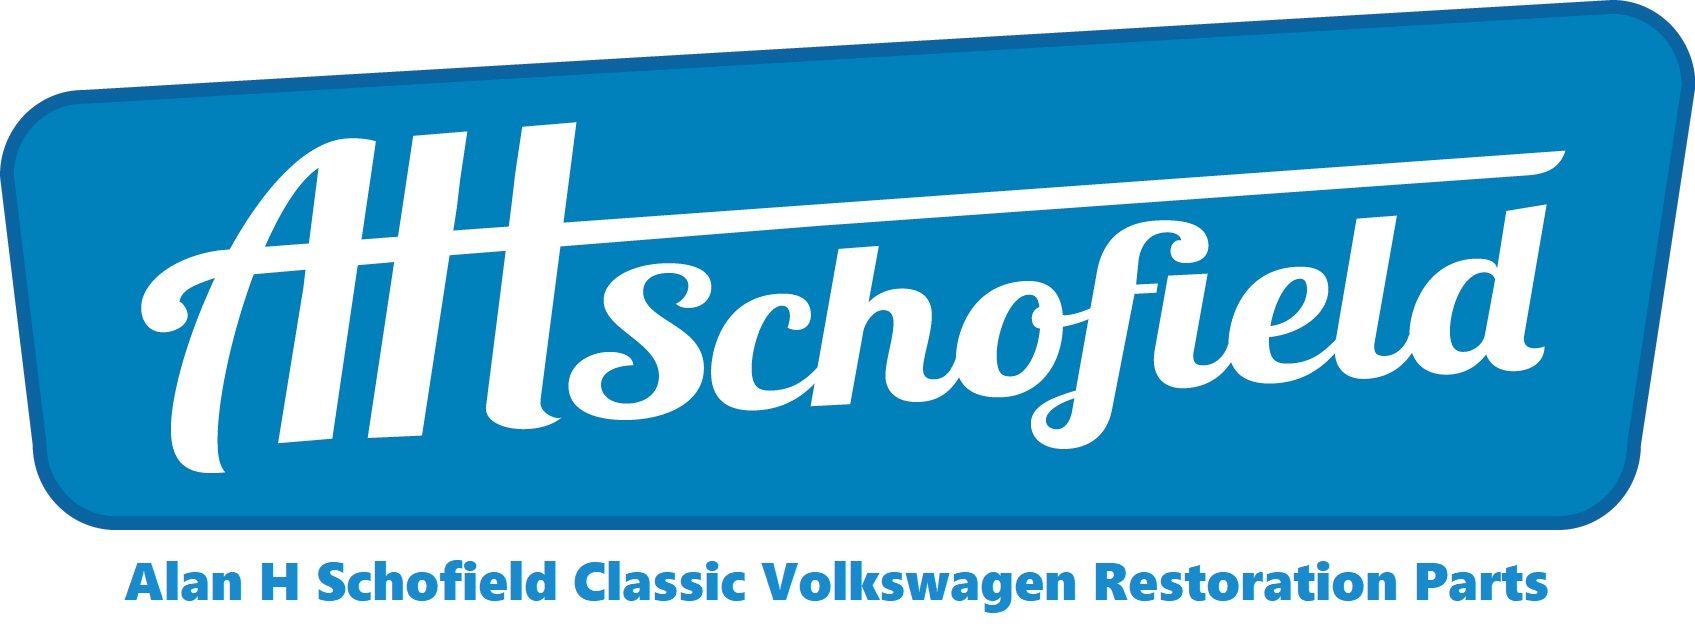 Alan H Schofield Classic Volkswagen Restoration Parts